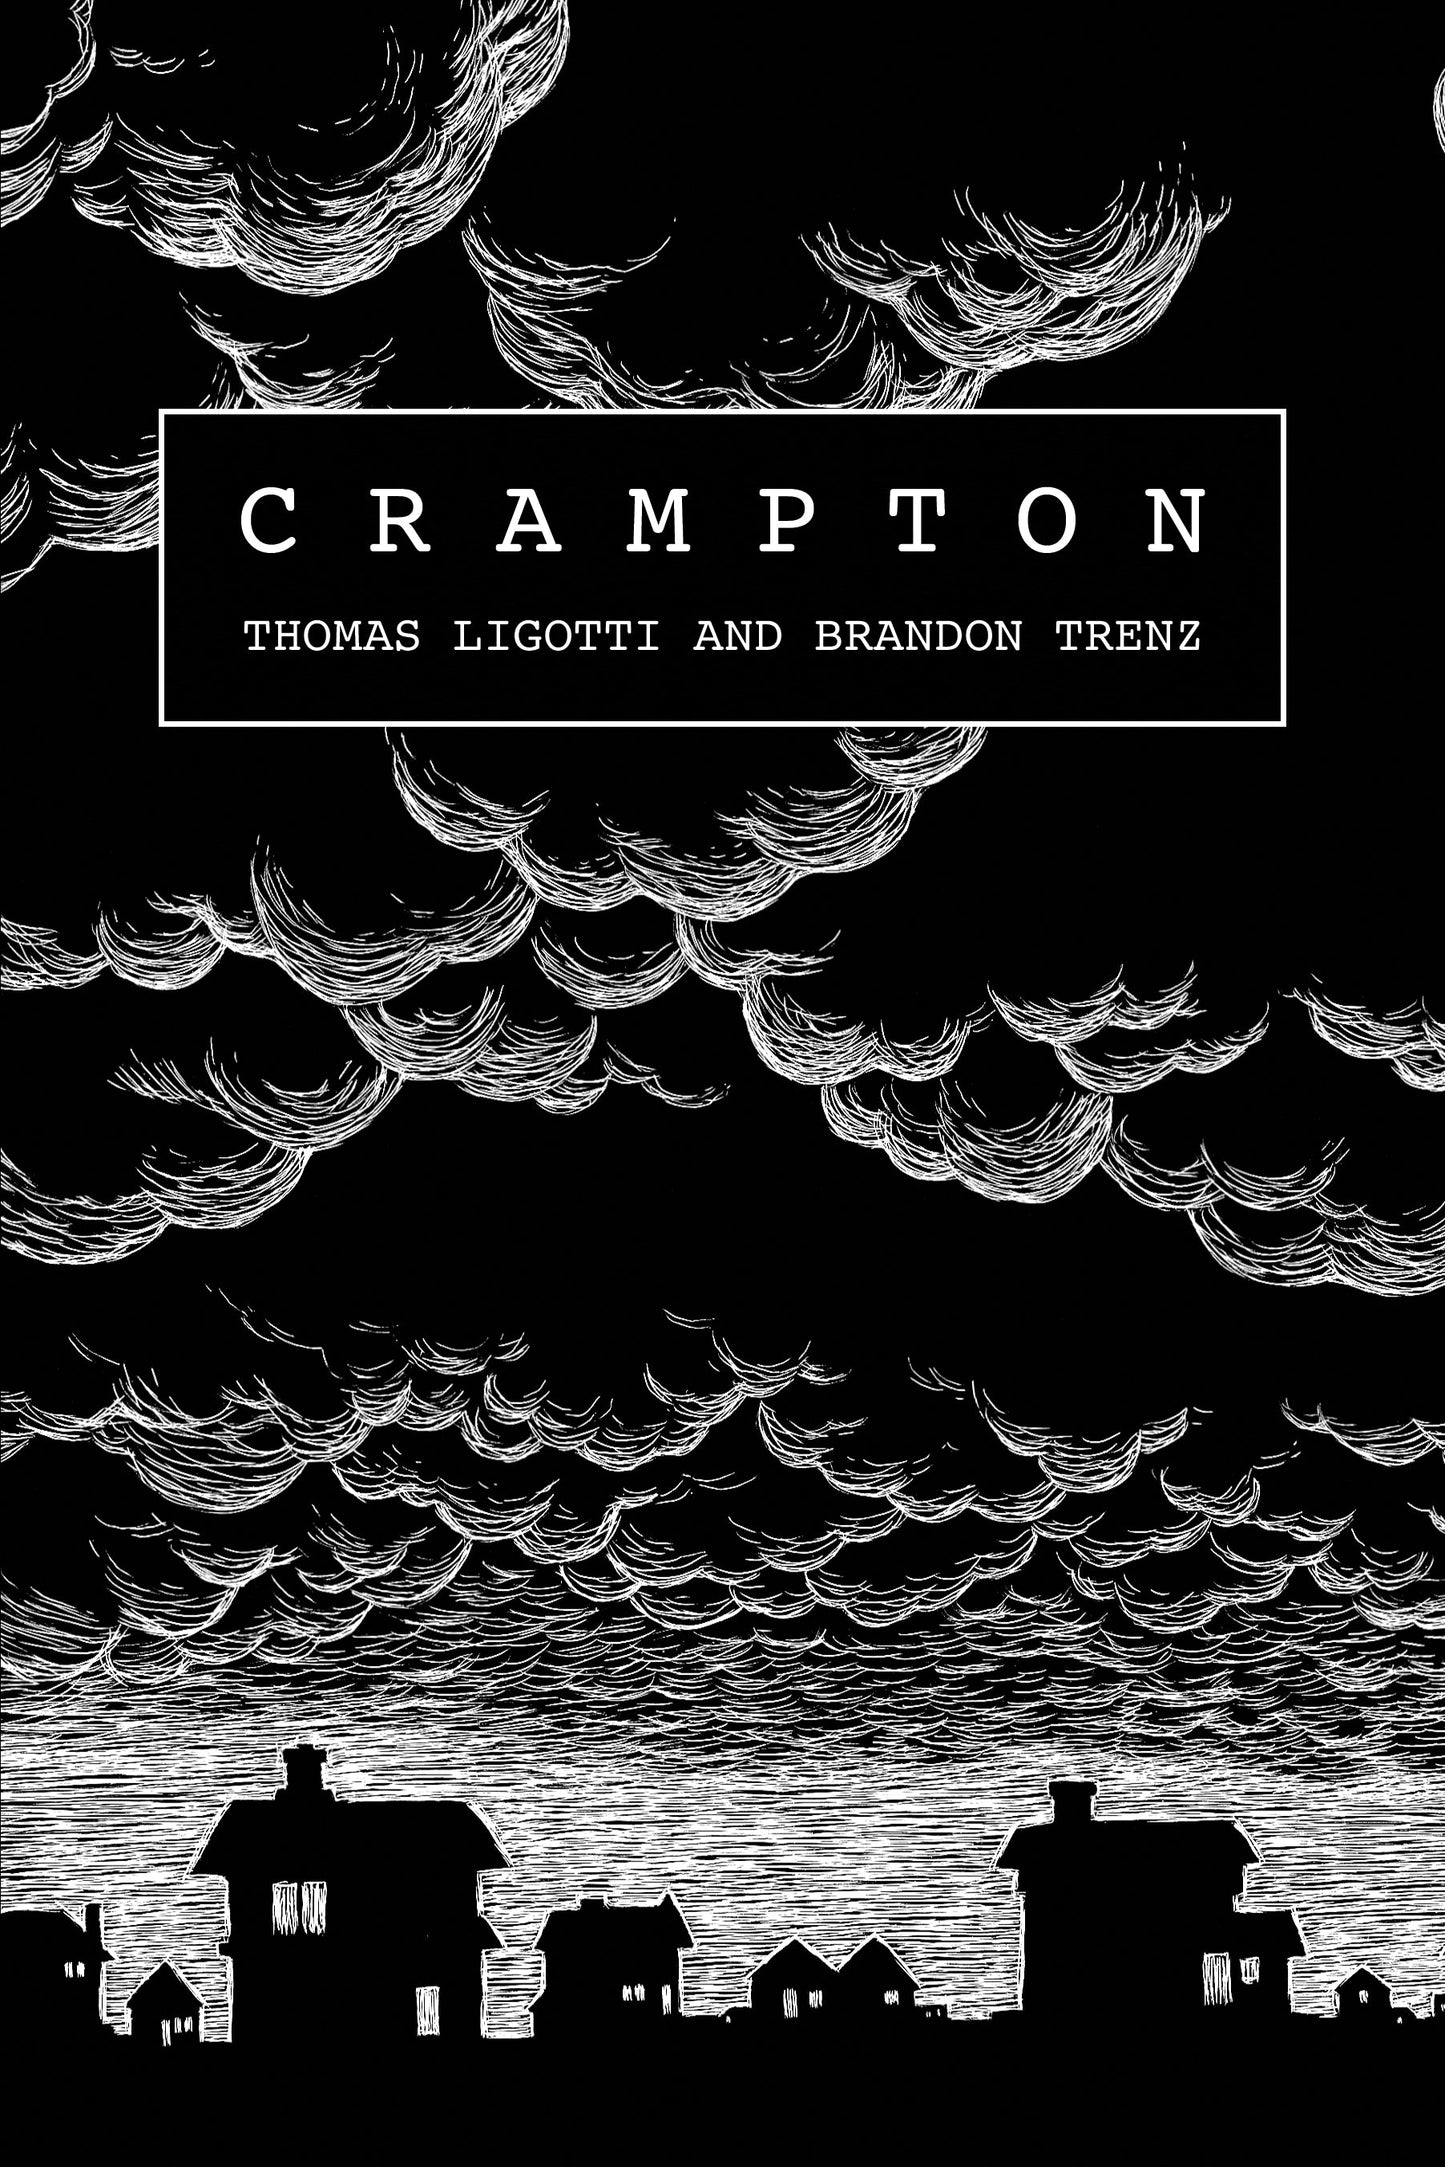 Crampton and Michigan Basement by Thomas Ligotti and Brandon Trenz - Hardcover slipcased set